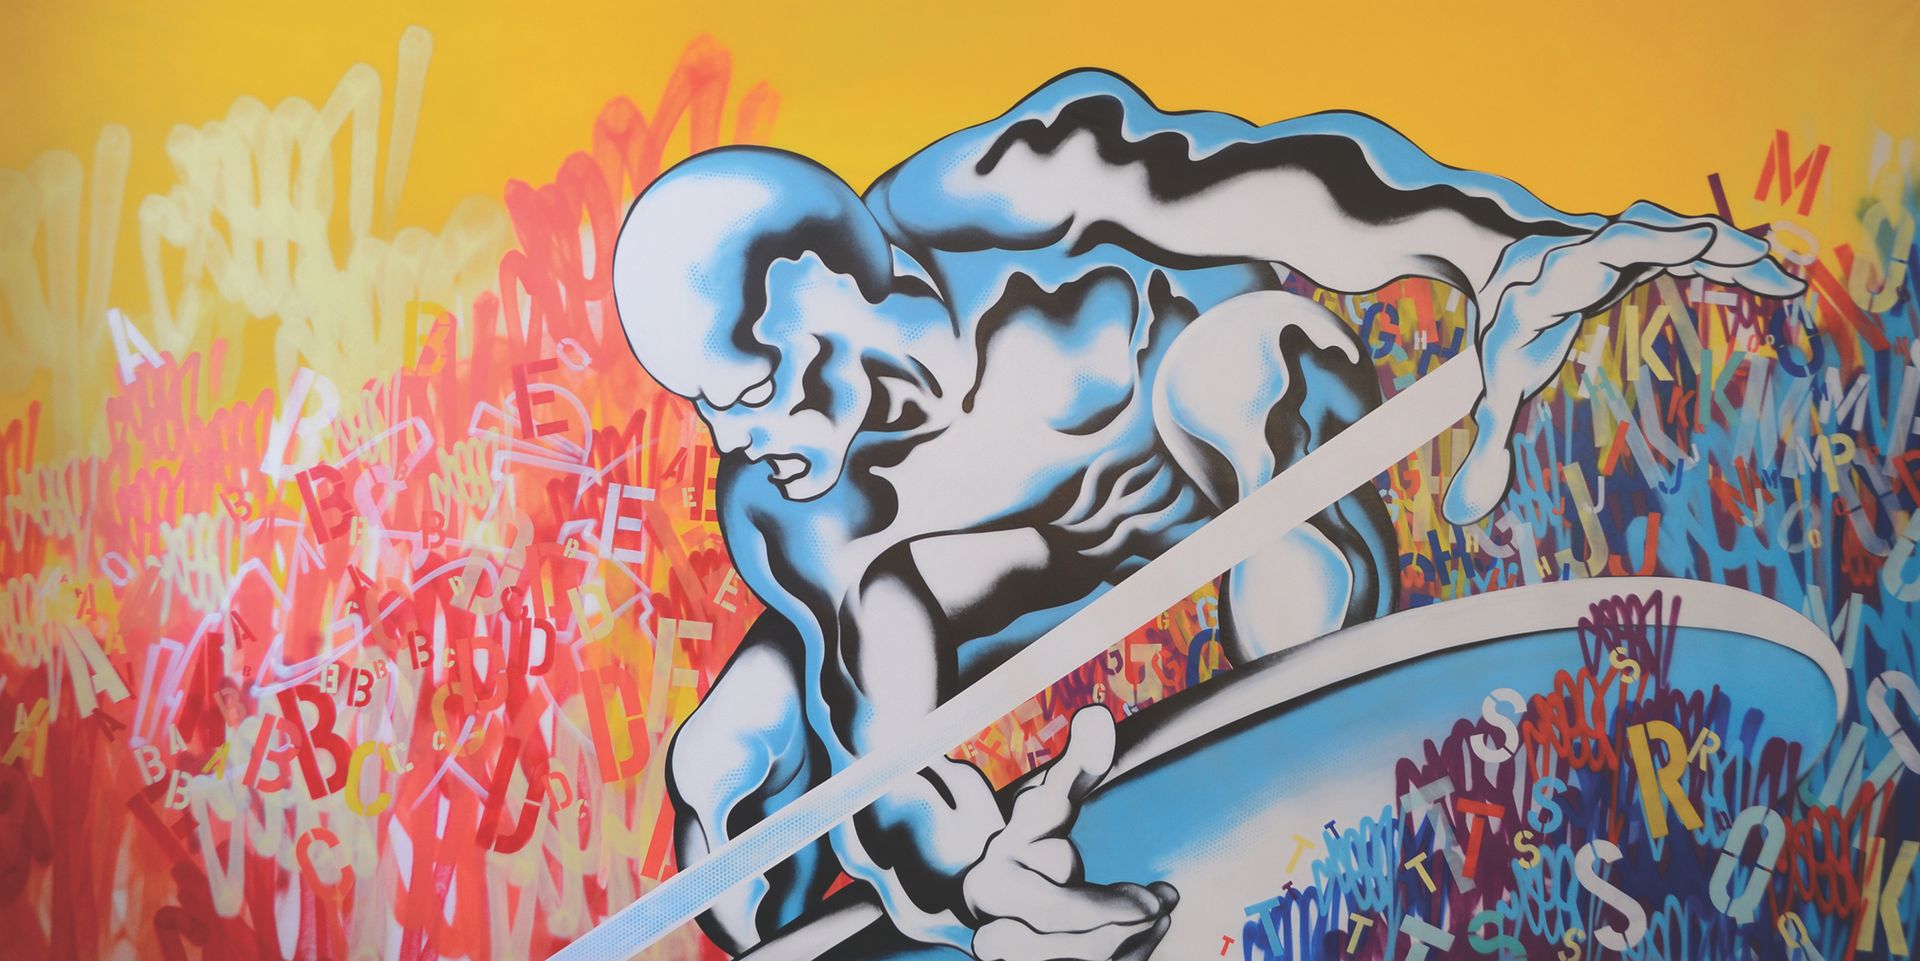 Null *SEEN (1961)

银色冲浪者, 1990

画布上的气雾剂和模板

背面有签名

200 x 500 cm